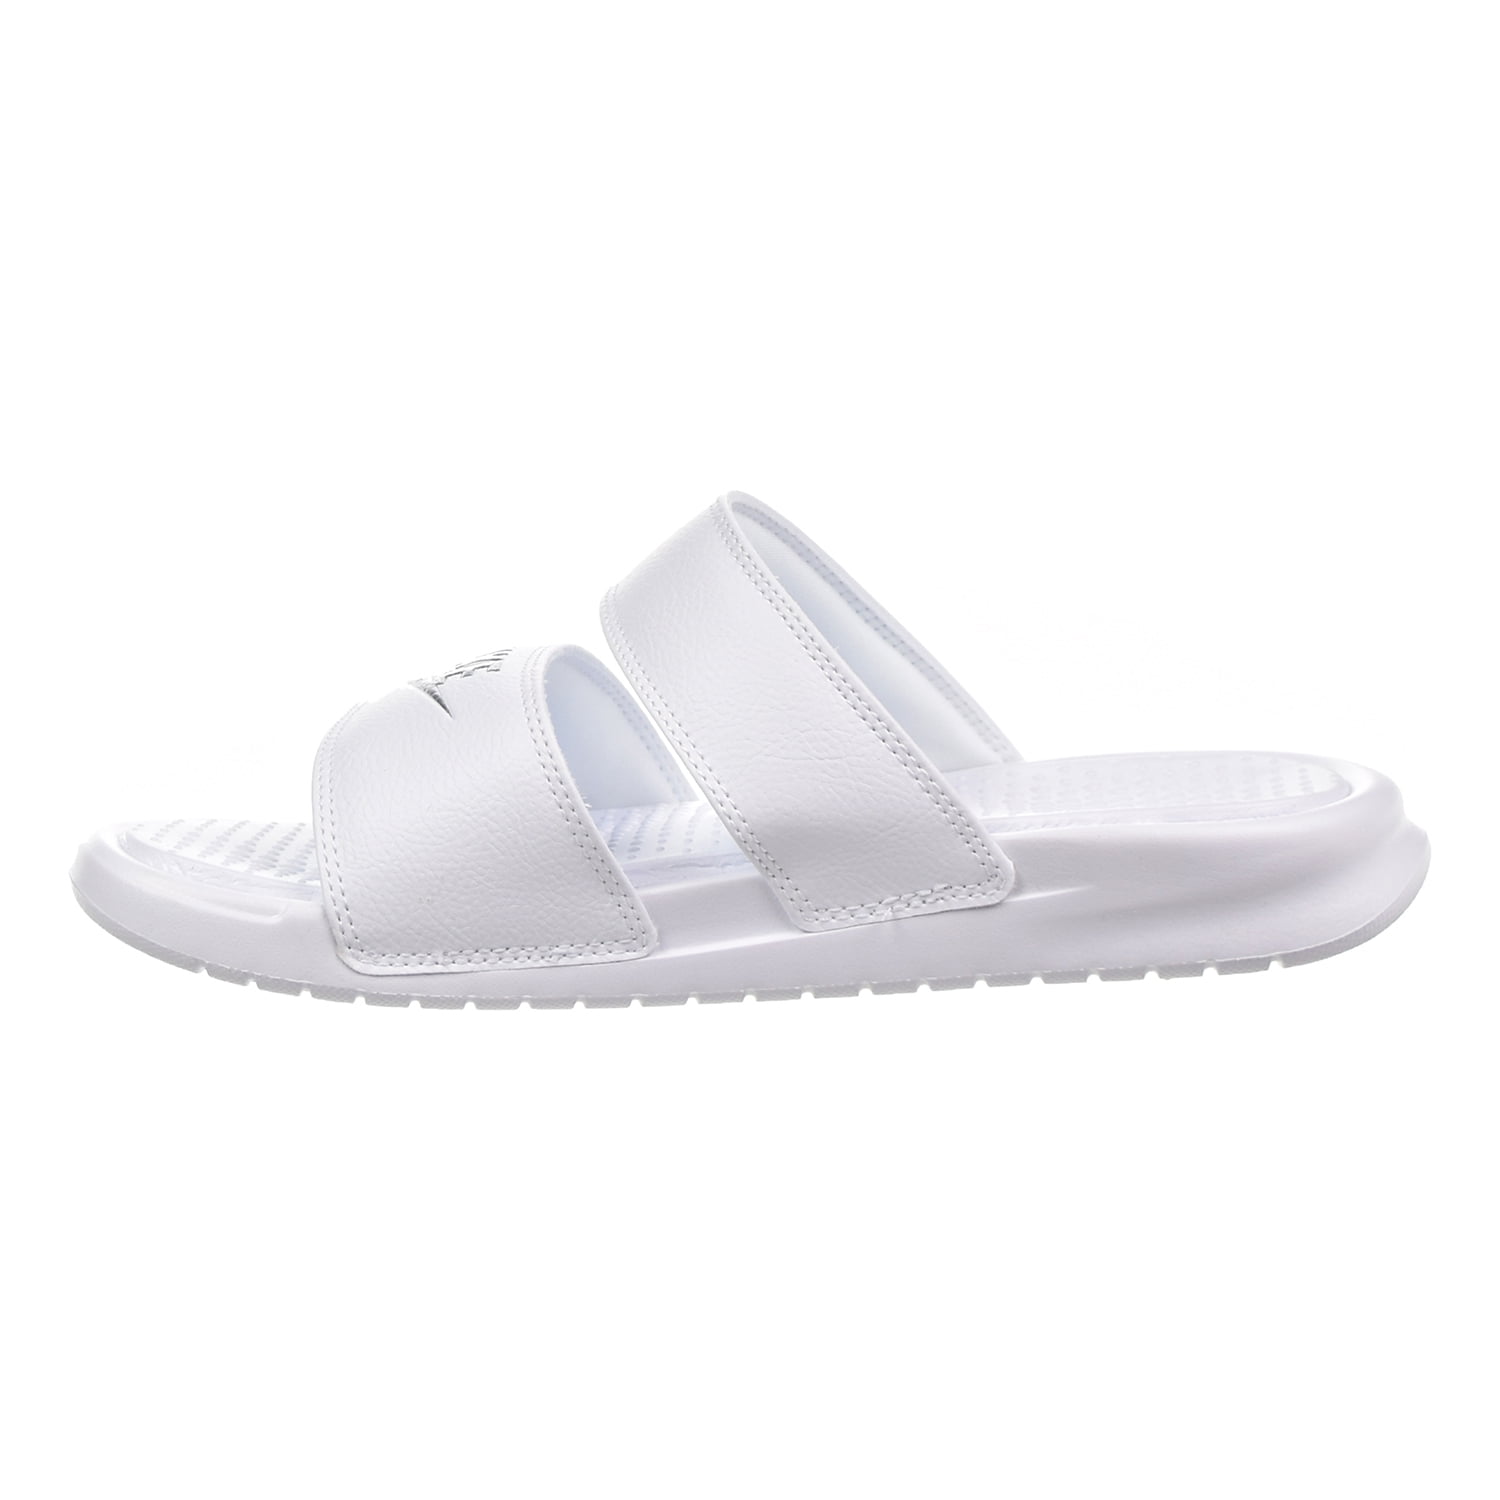 Nike Benassi Ultra Sandals Silver 819717-100 - Walmart.com